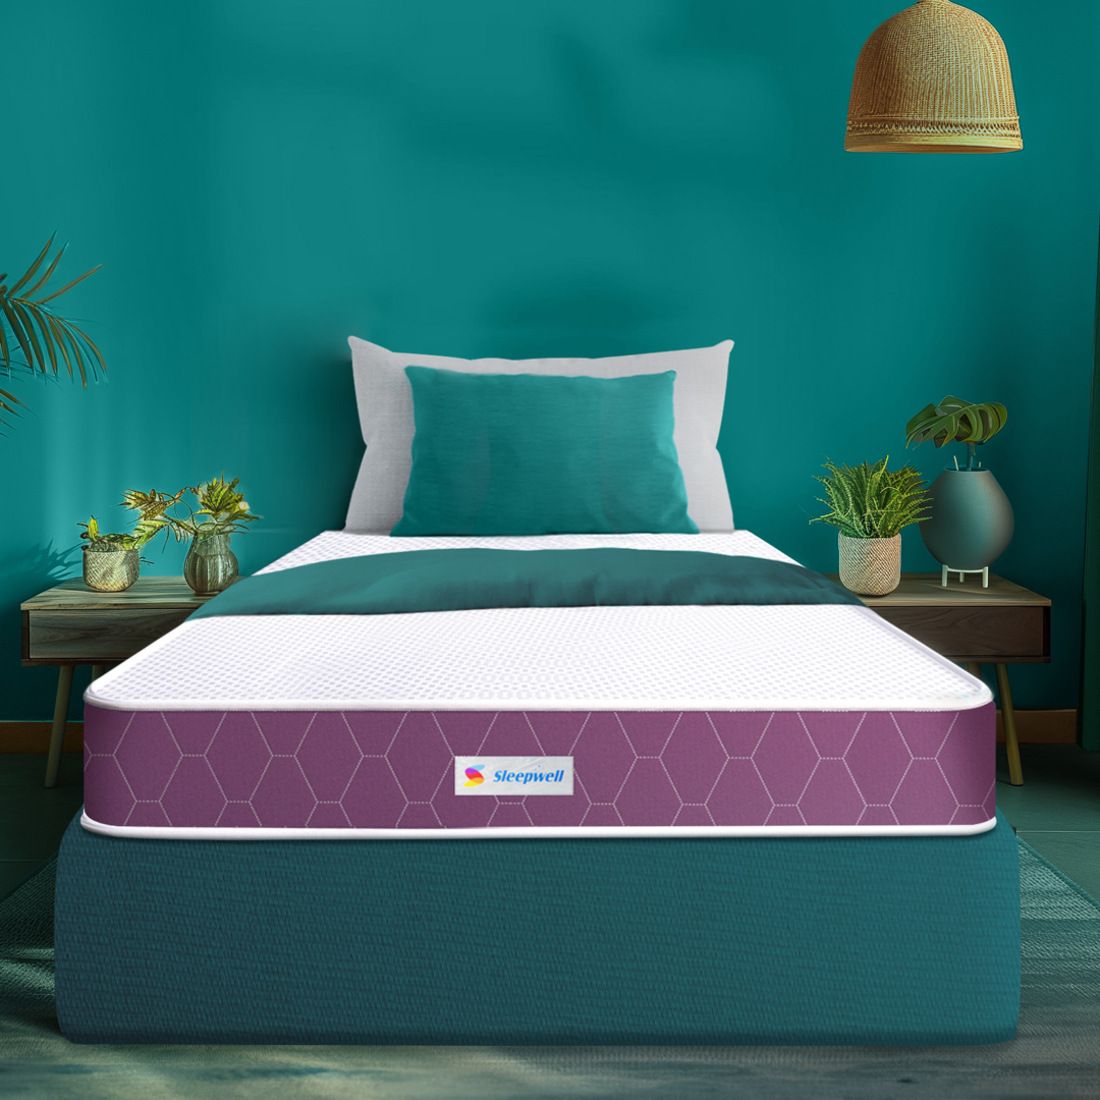 Sleepwell Ortho Mattress | Quilted | 6-inch Single Bed Size, Impressions Memory Foam, Medium Firm Mattress(Purple, 72x42X6)